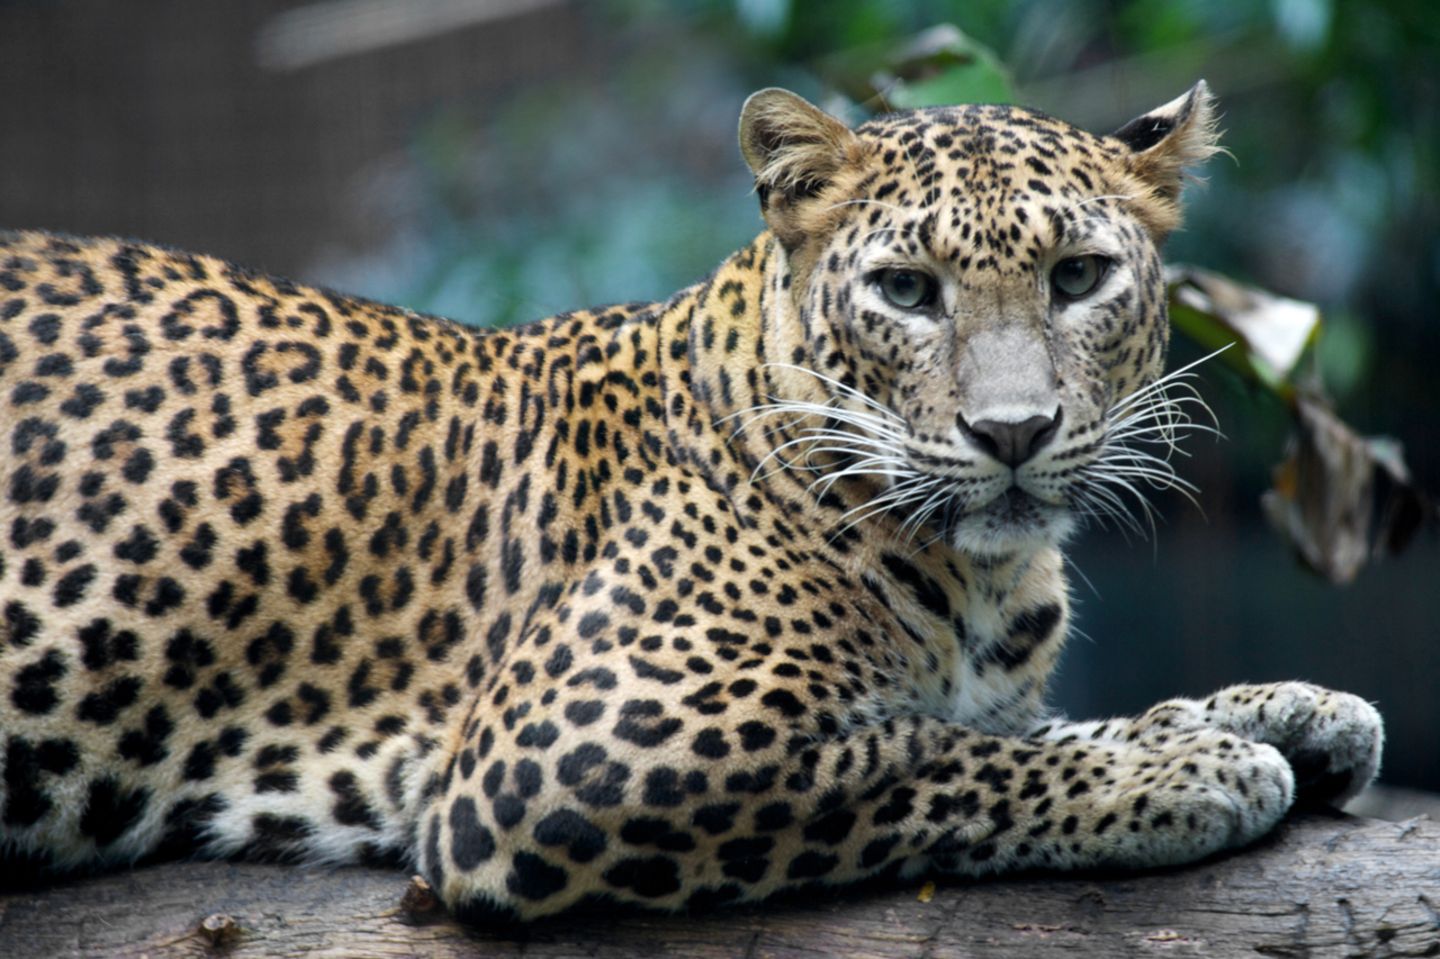 Englische Redewendung: A leopard cannot change its spots